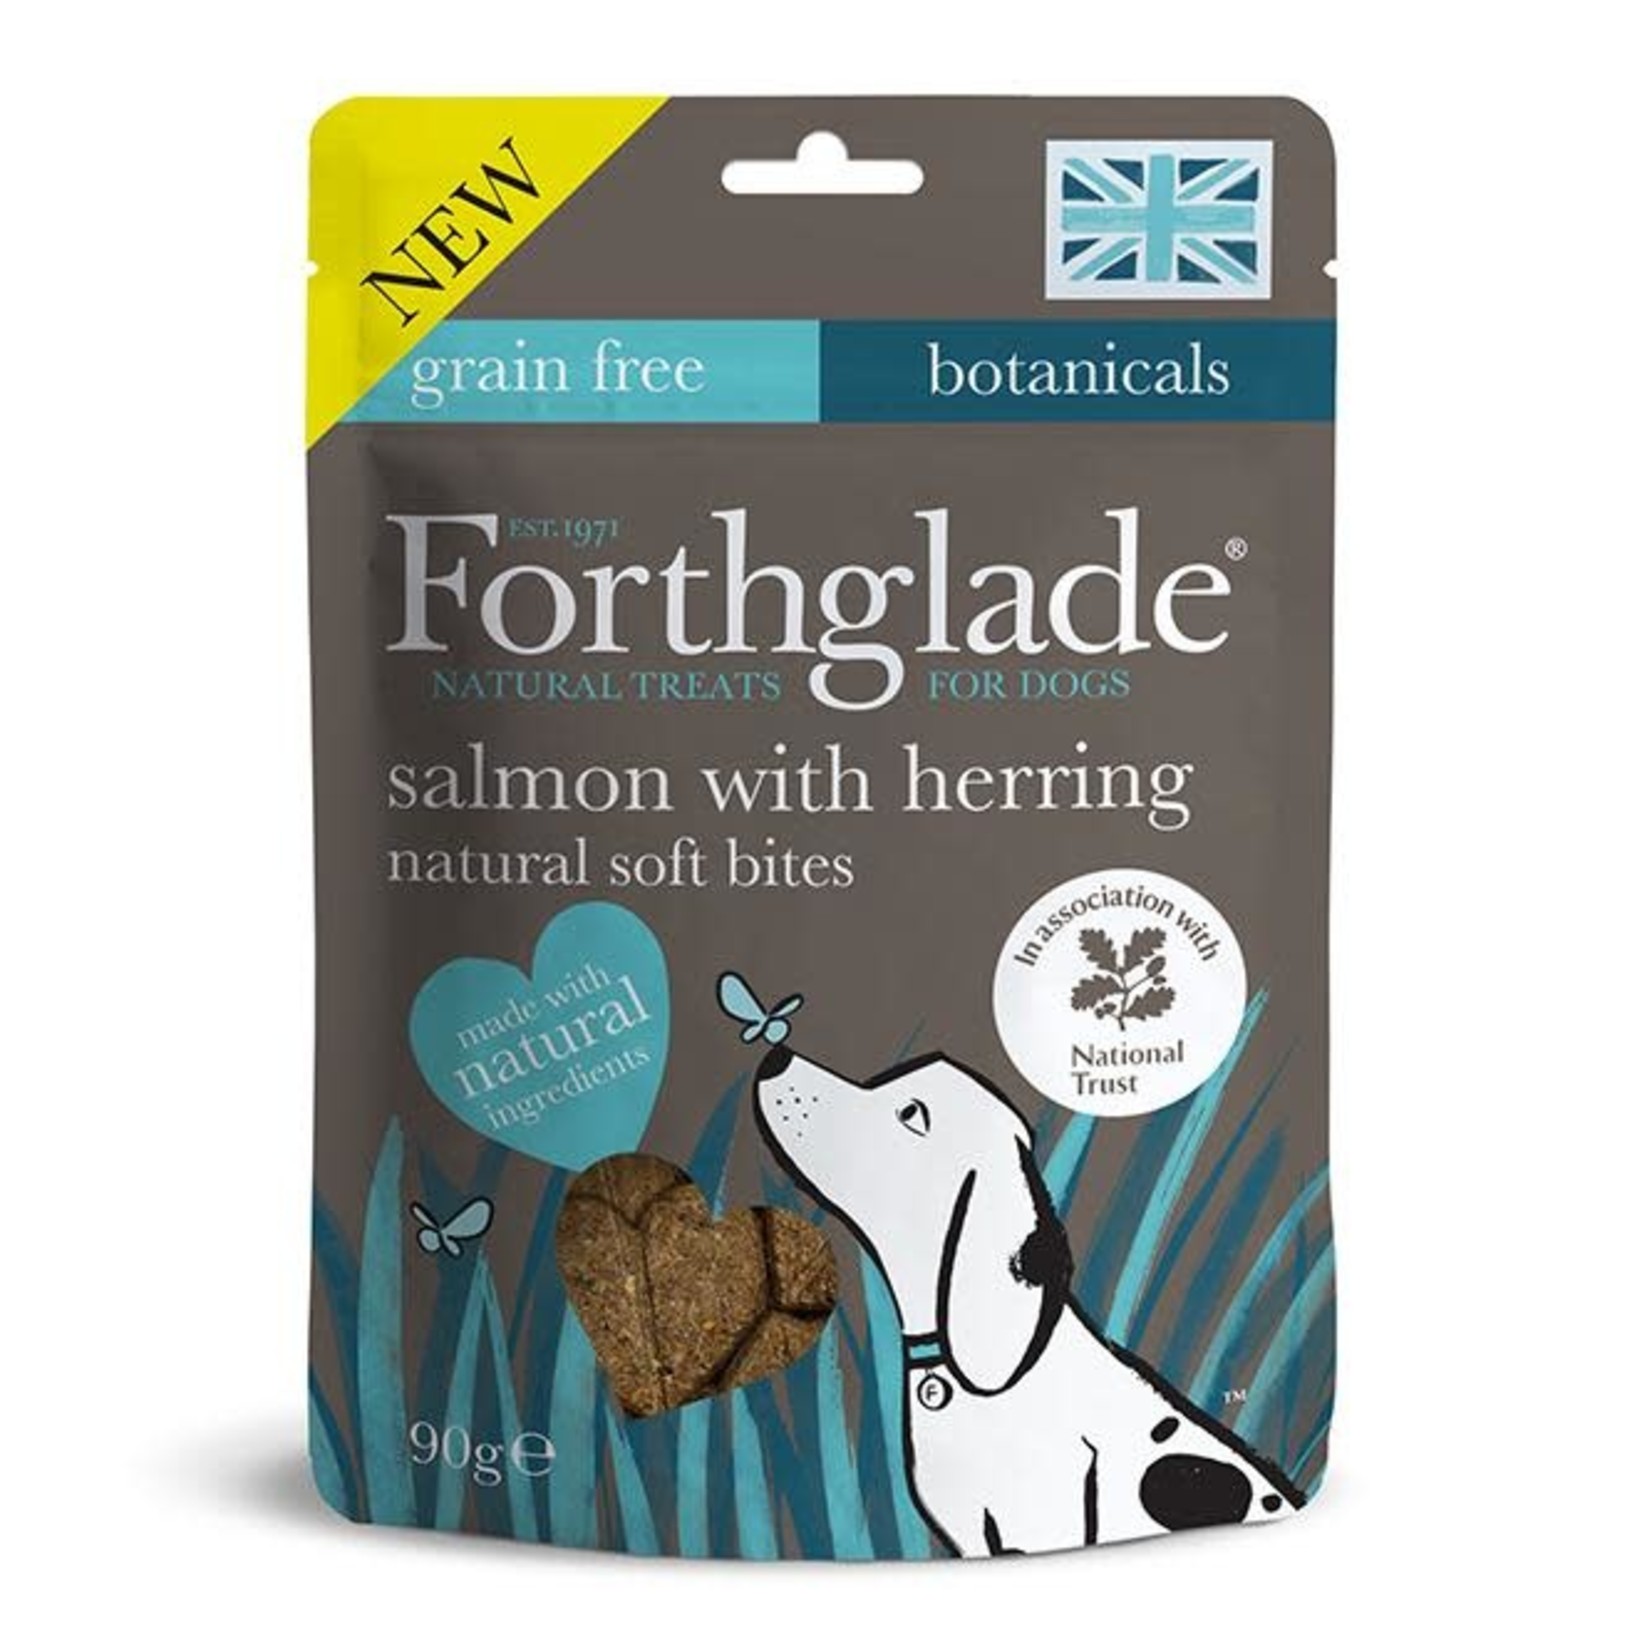 Forthglade Natural Soft Bites Salmon with Herring Dog Treats, 90g